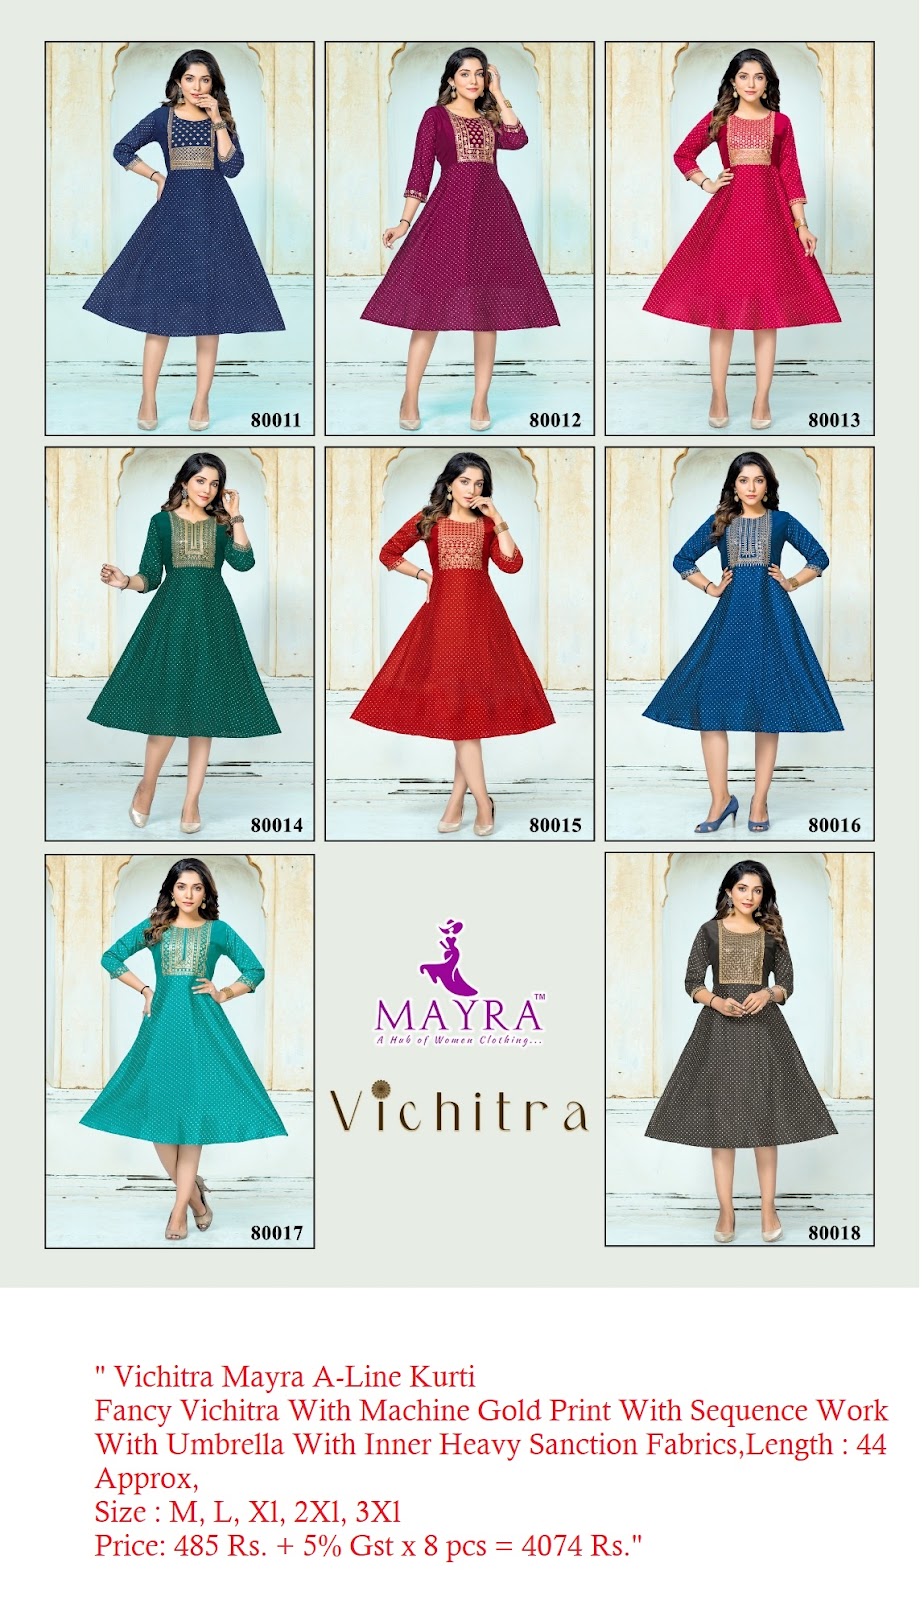 Mayra Vichitra Branded A-Line Kurti Catalog Lowest Price